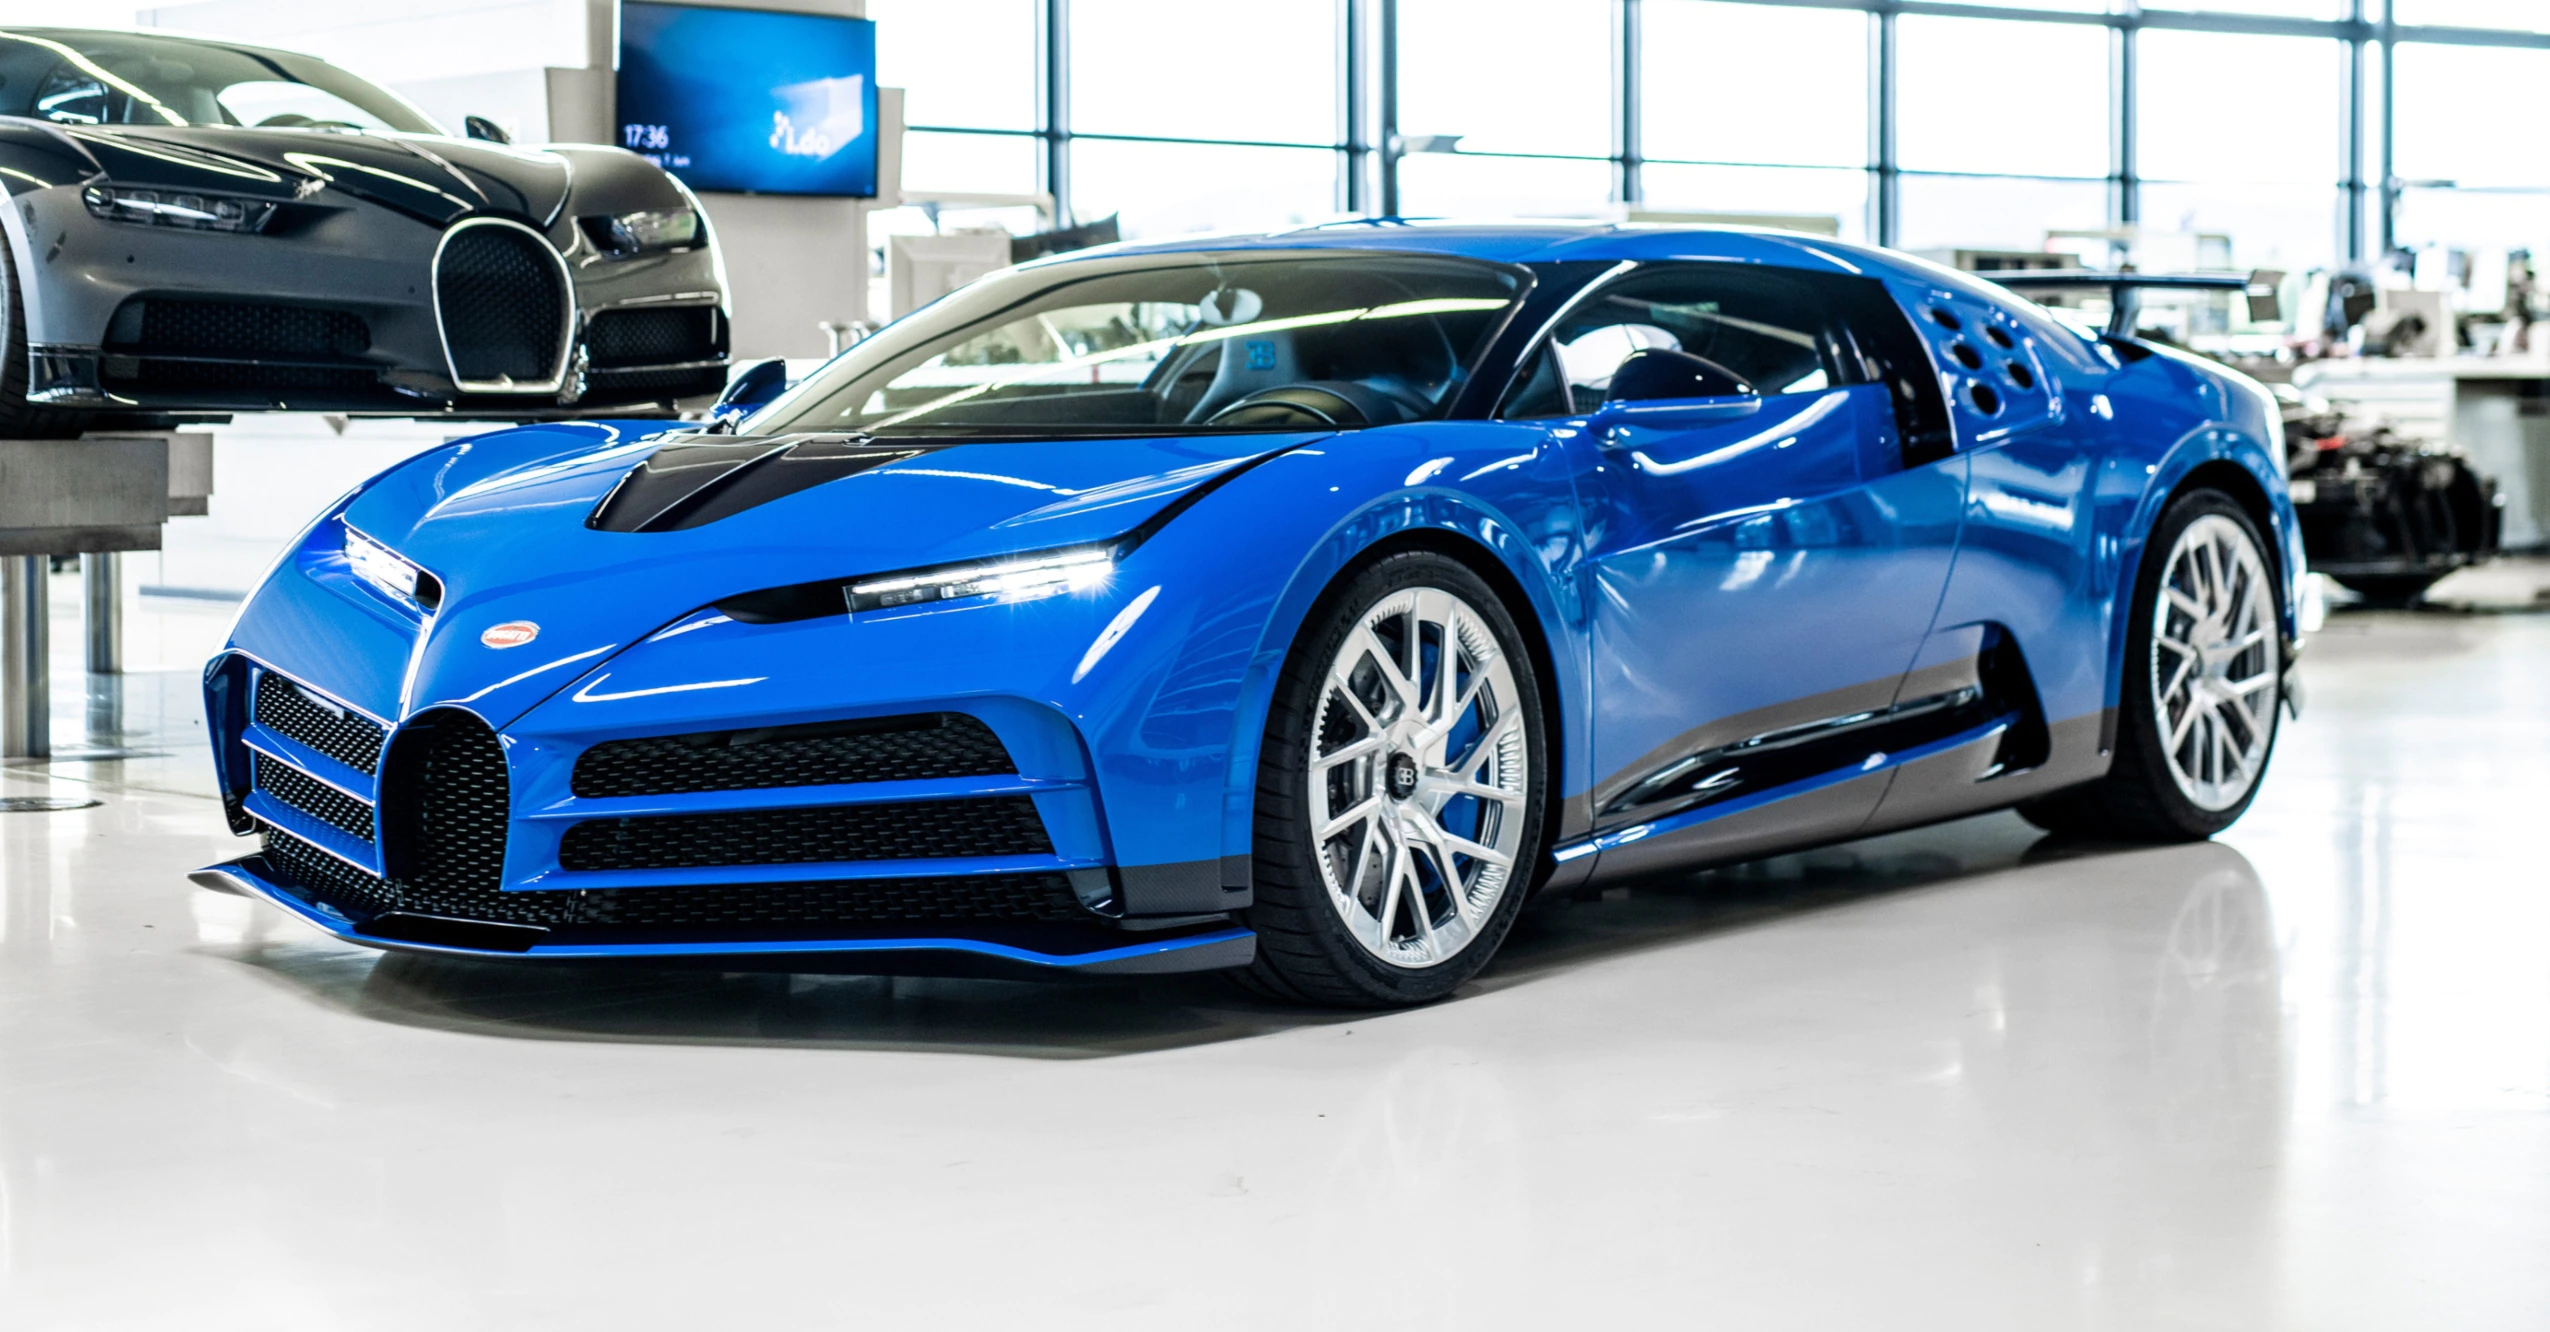 The Bonkers, $8.8 Million Bugatti Centodieci Is Finally Here